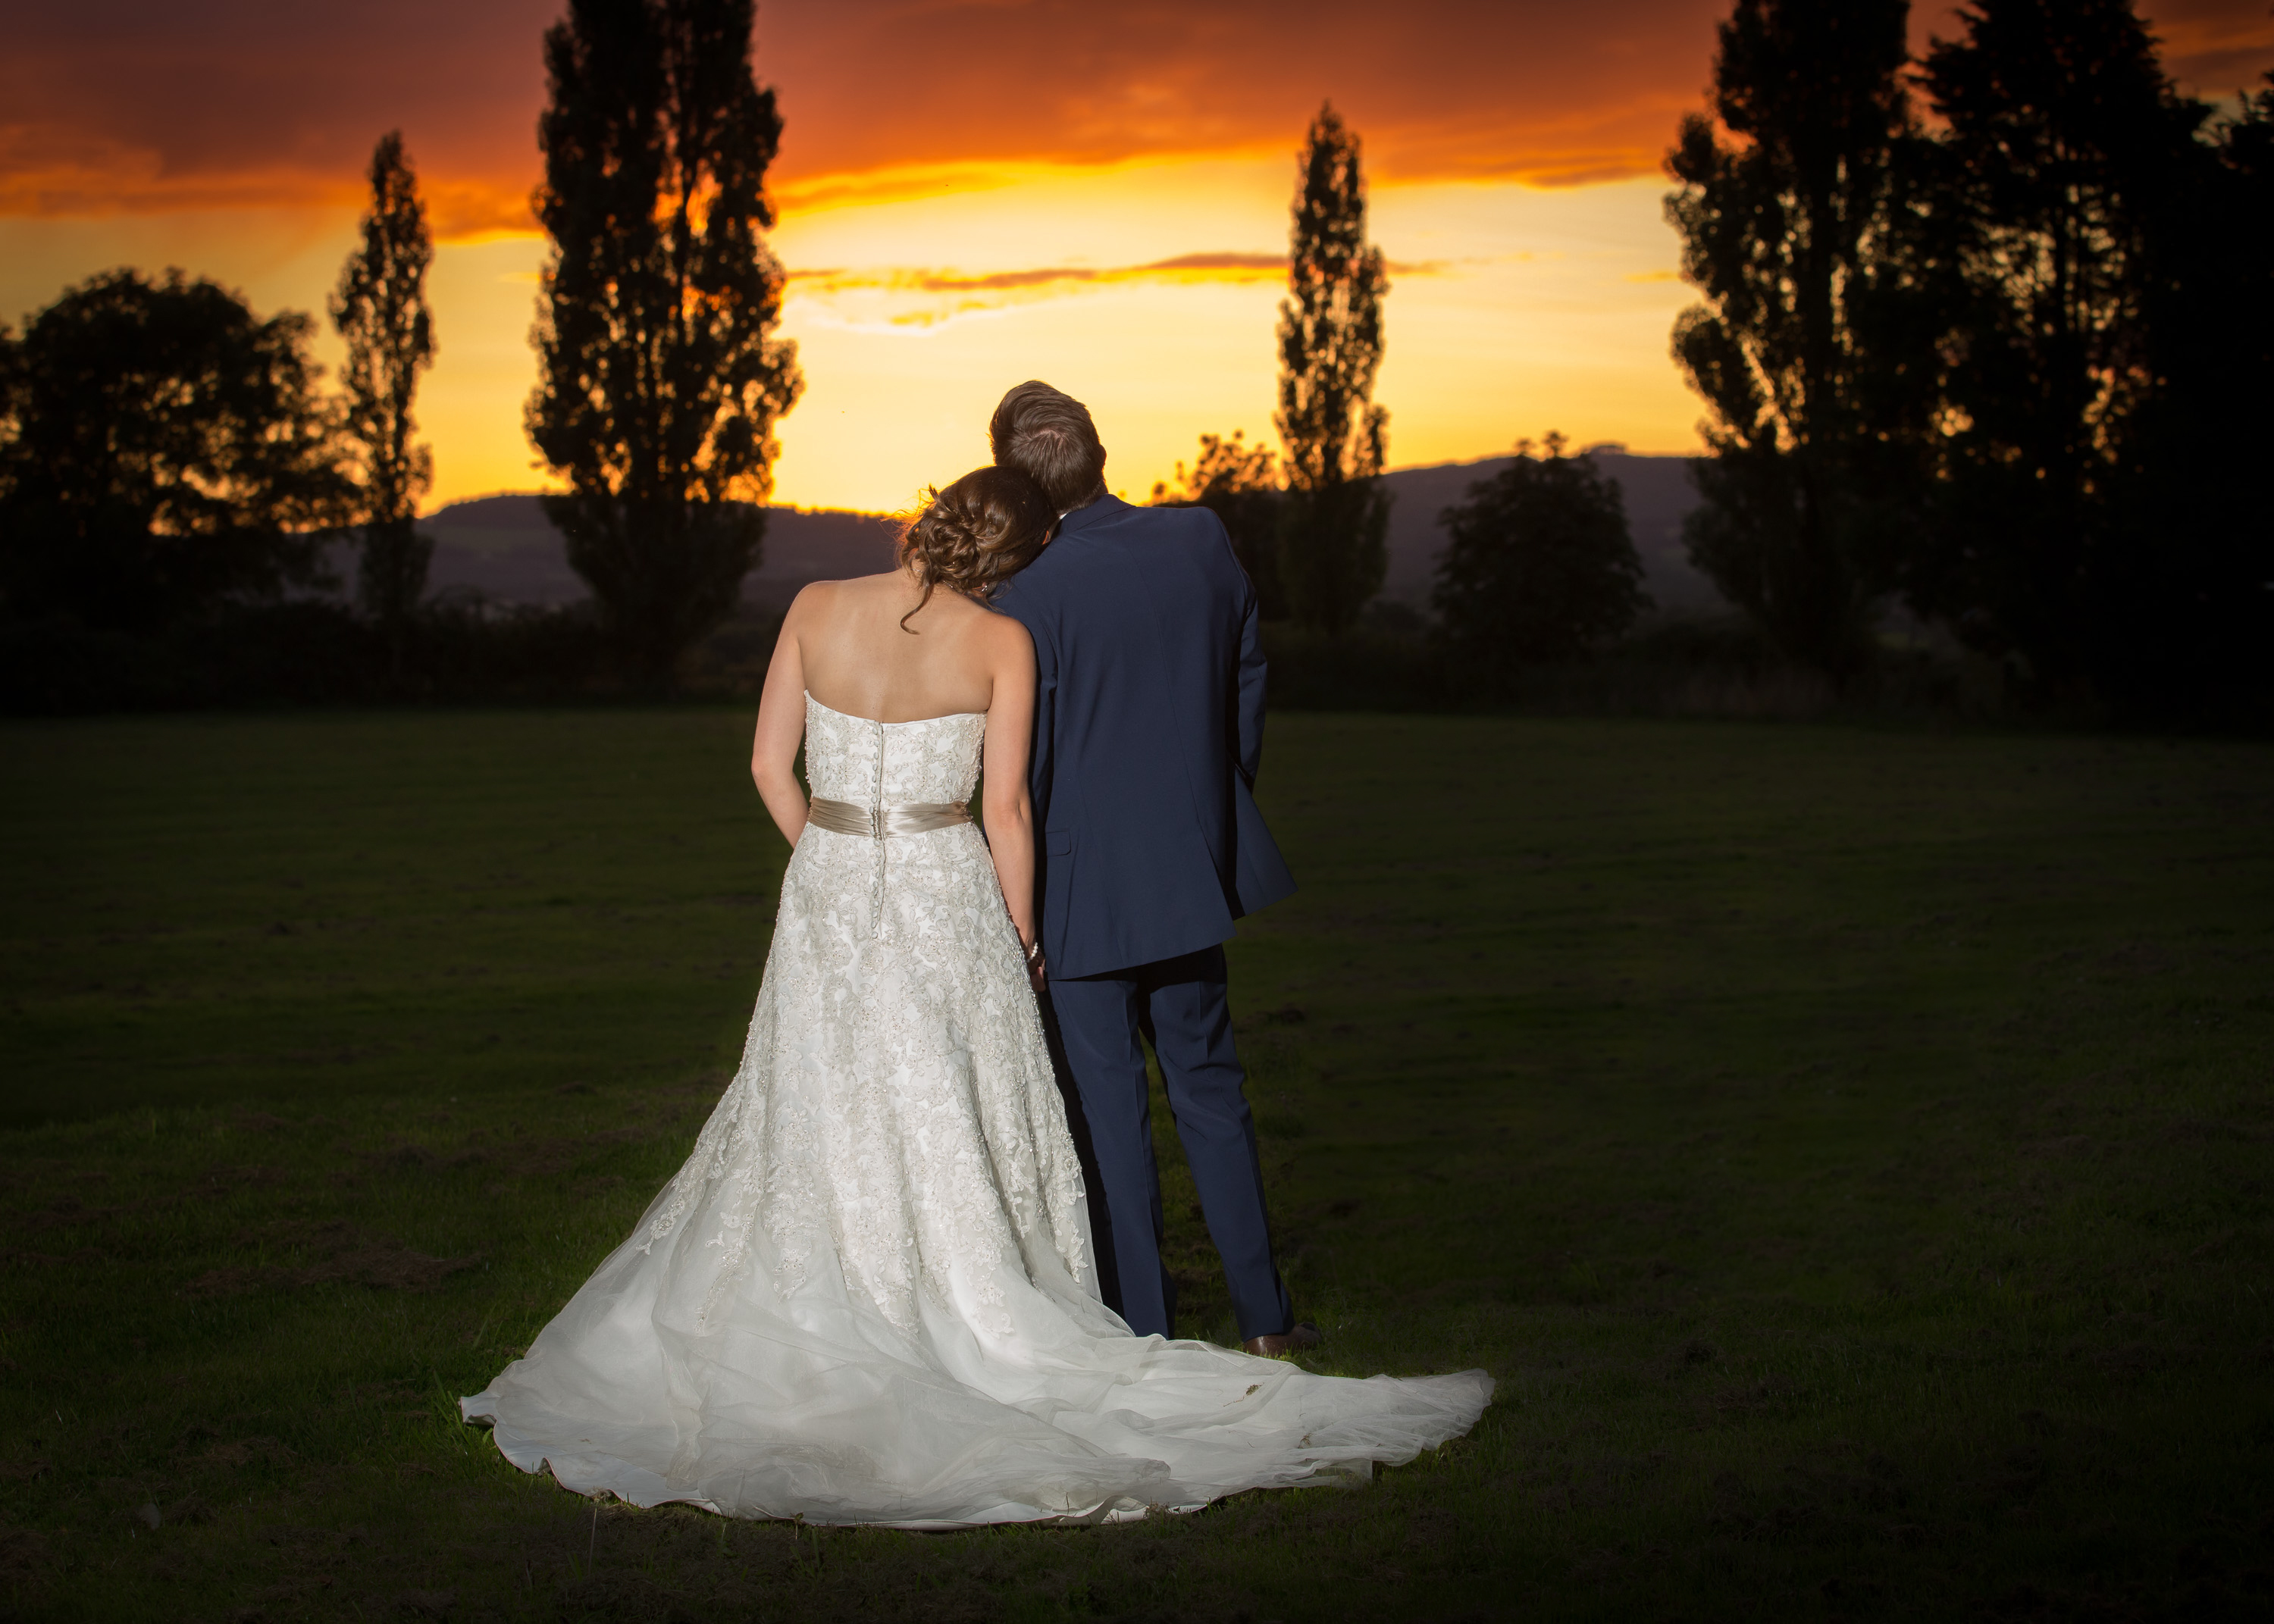 Wedding blog bamboozled by photography styles photographers help sunset photograph